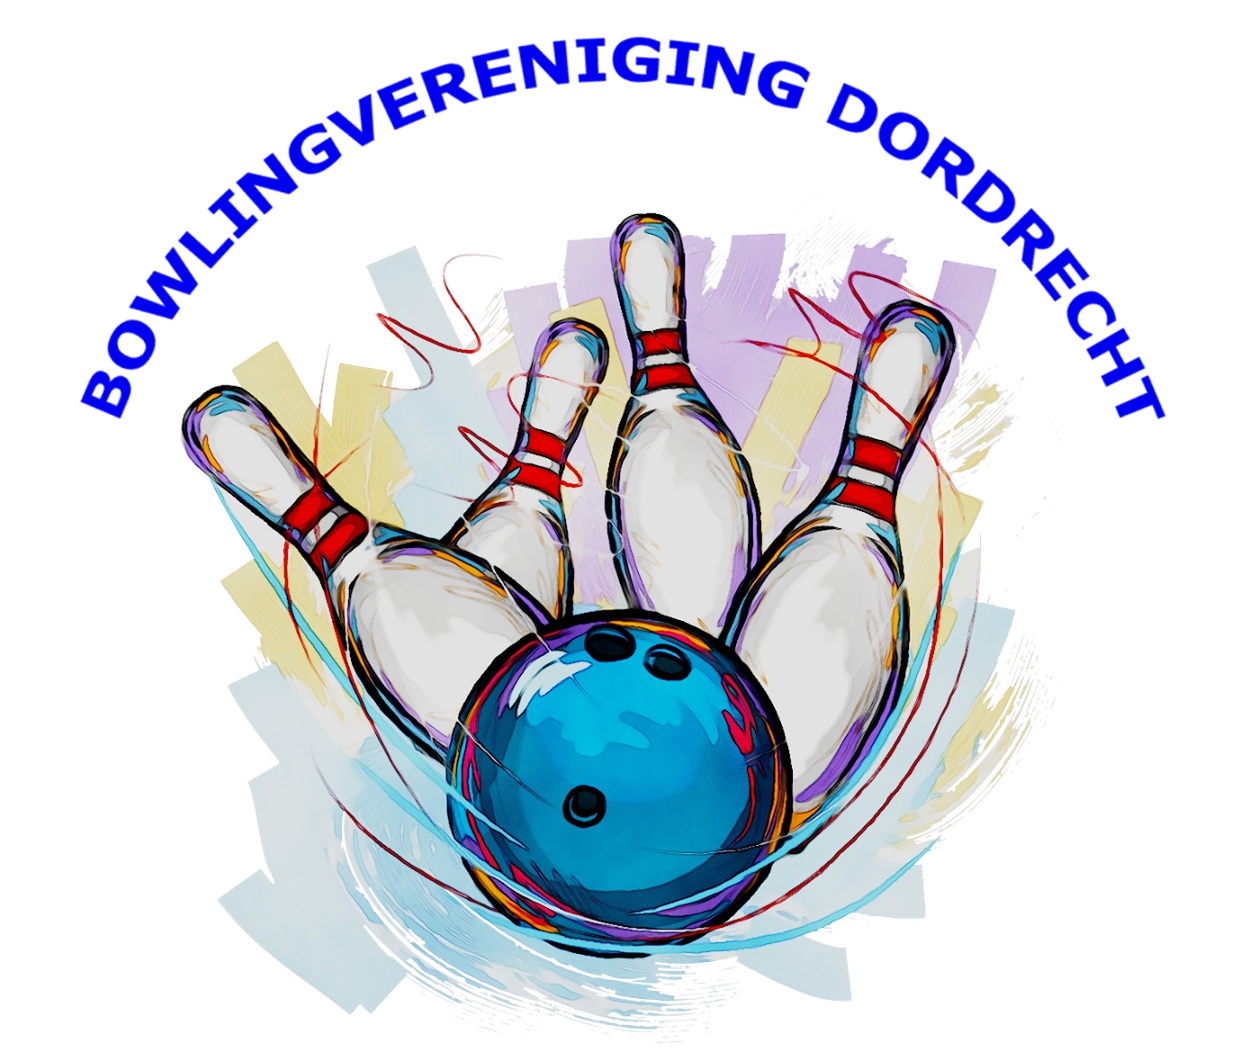 Bowlingvereniging Dordrecht